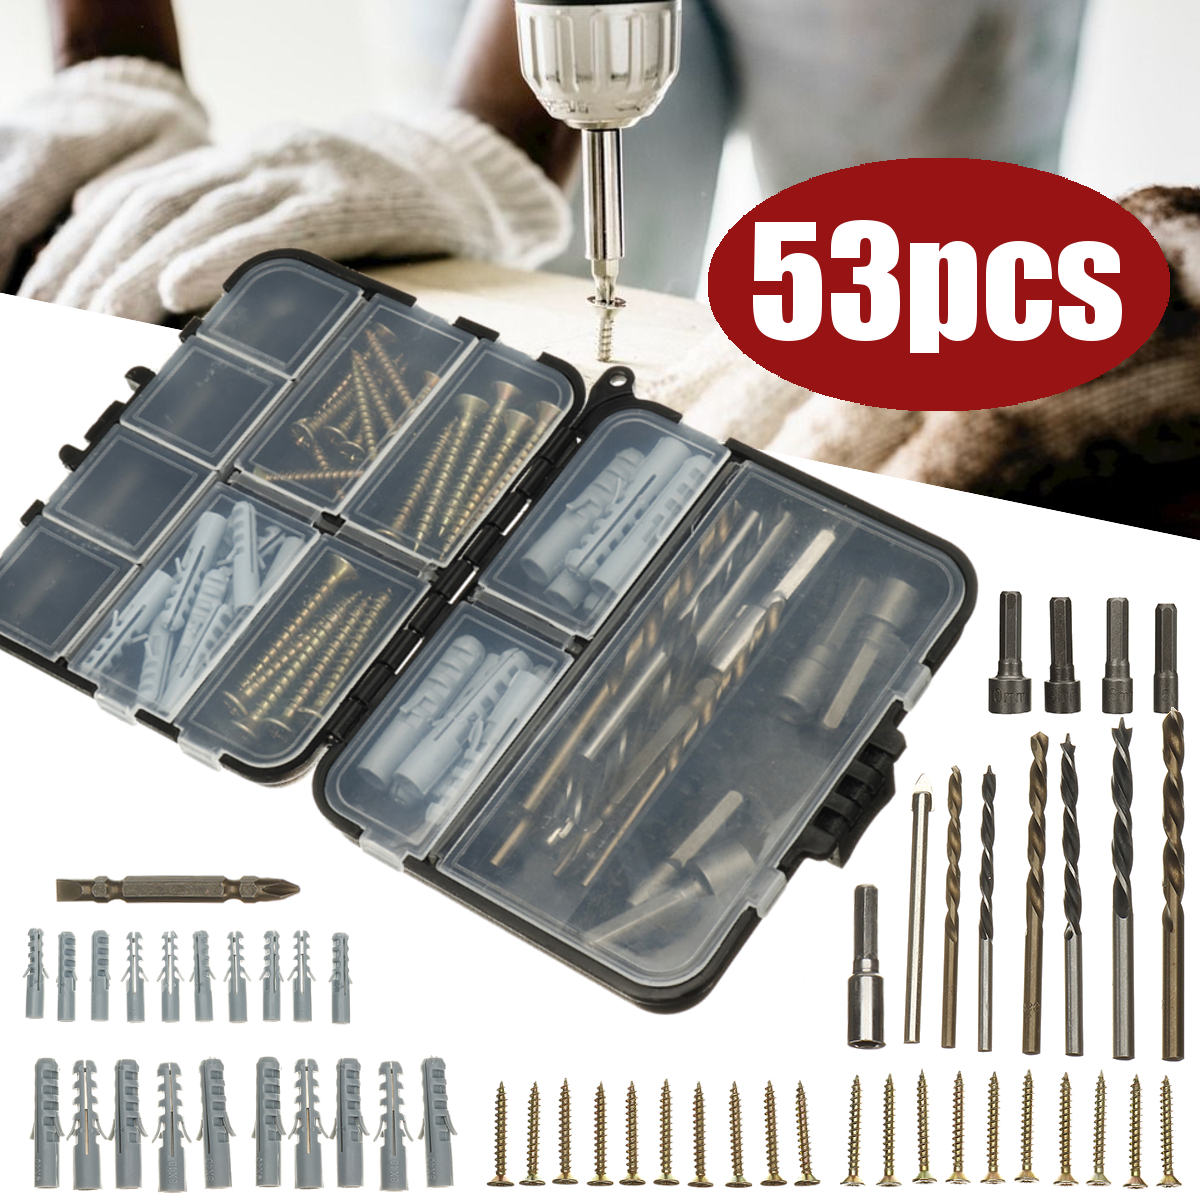 53pcs-Electric-Screwdriver-Accessories-Expansion-Screws-Sockets-Drill-Bits-Alloy-Steel-Drill-Bits-1791355-1